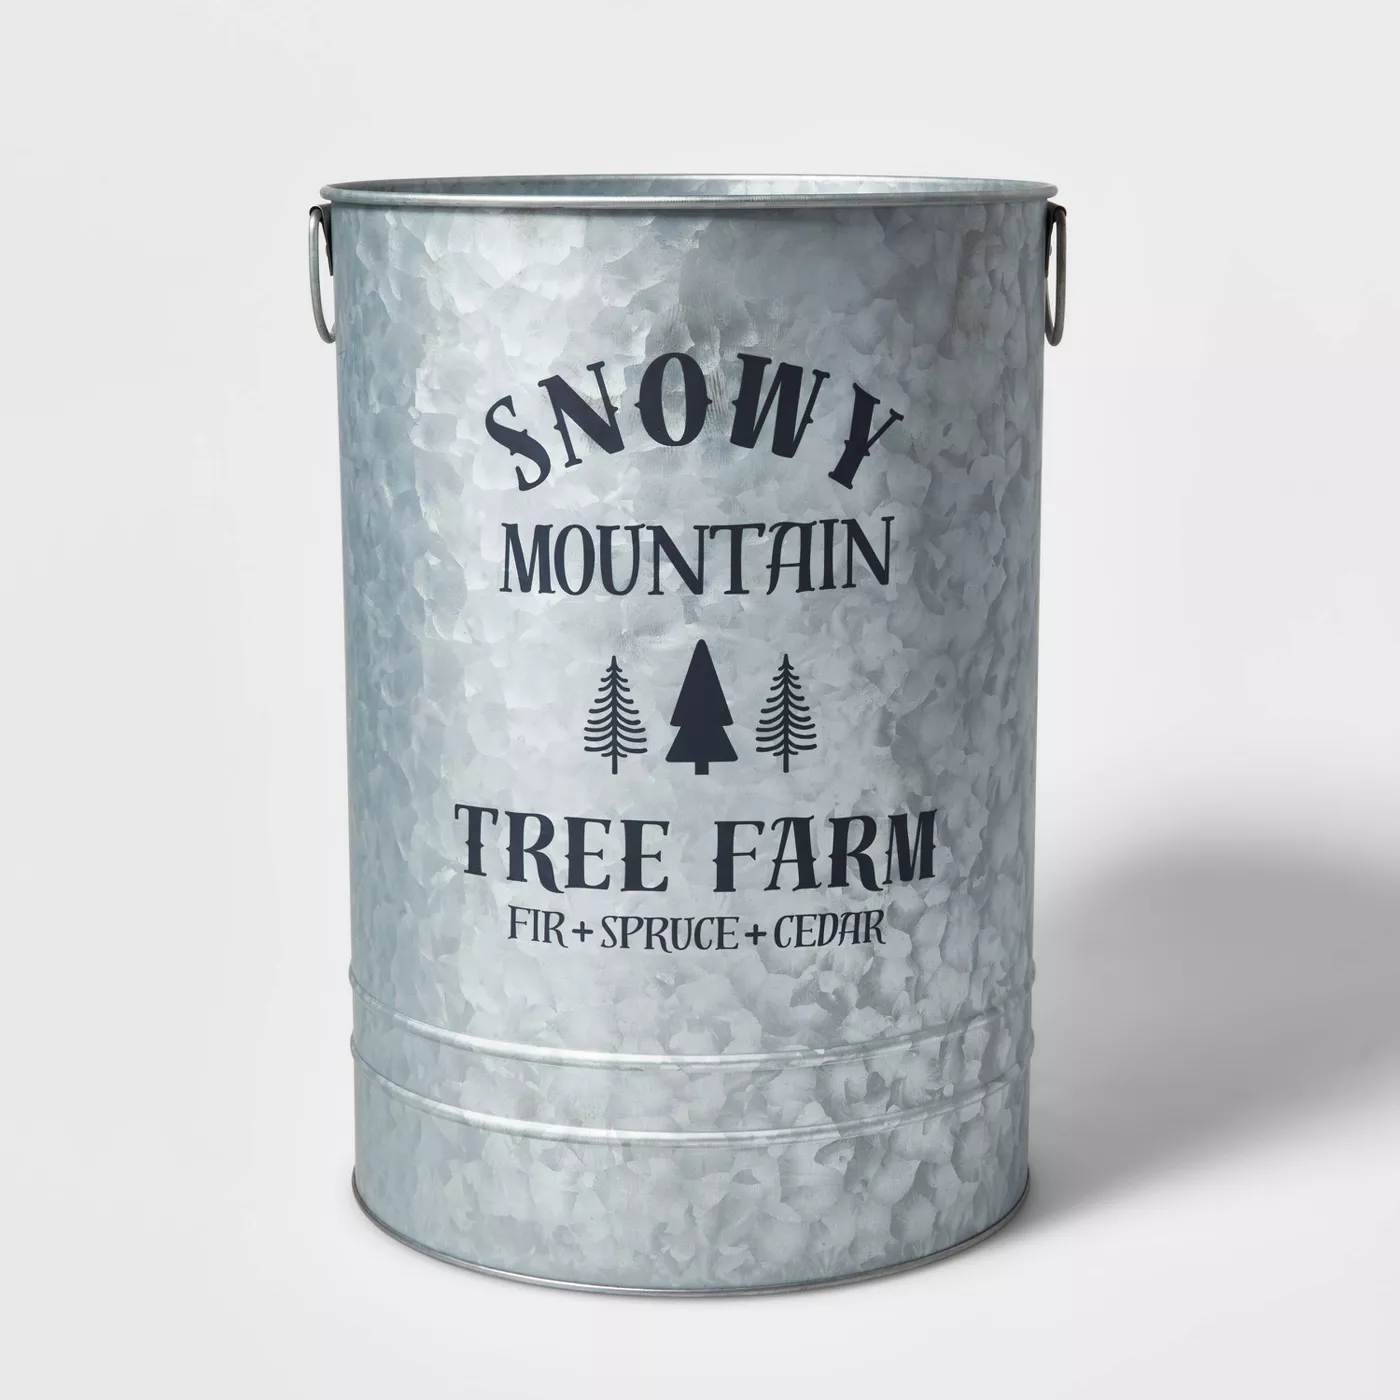 Snowy Mountain Tree Farm Galvanized Bucket - Wondershop™ - image 1 of 2